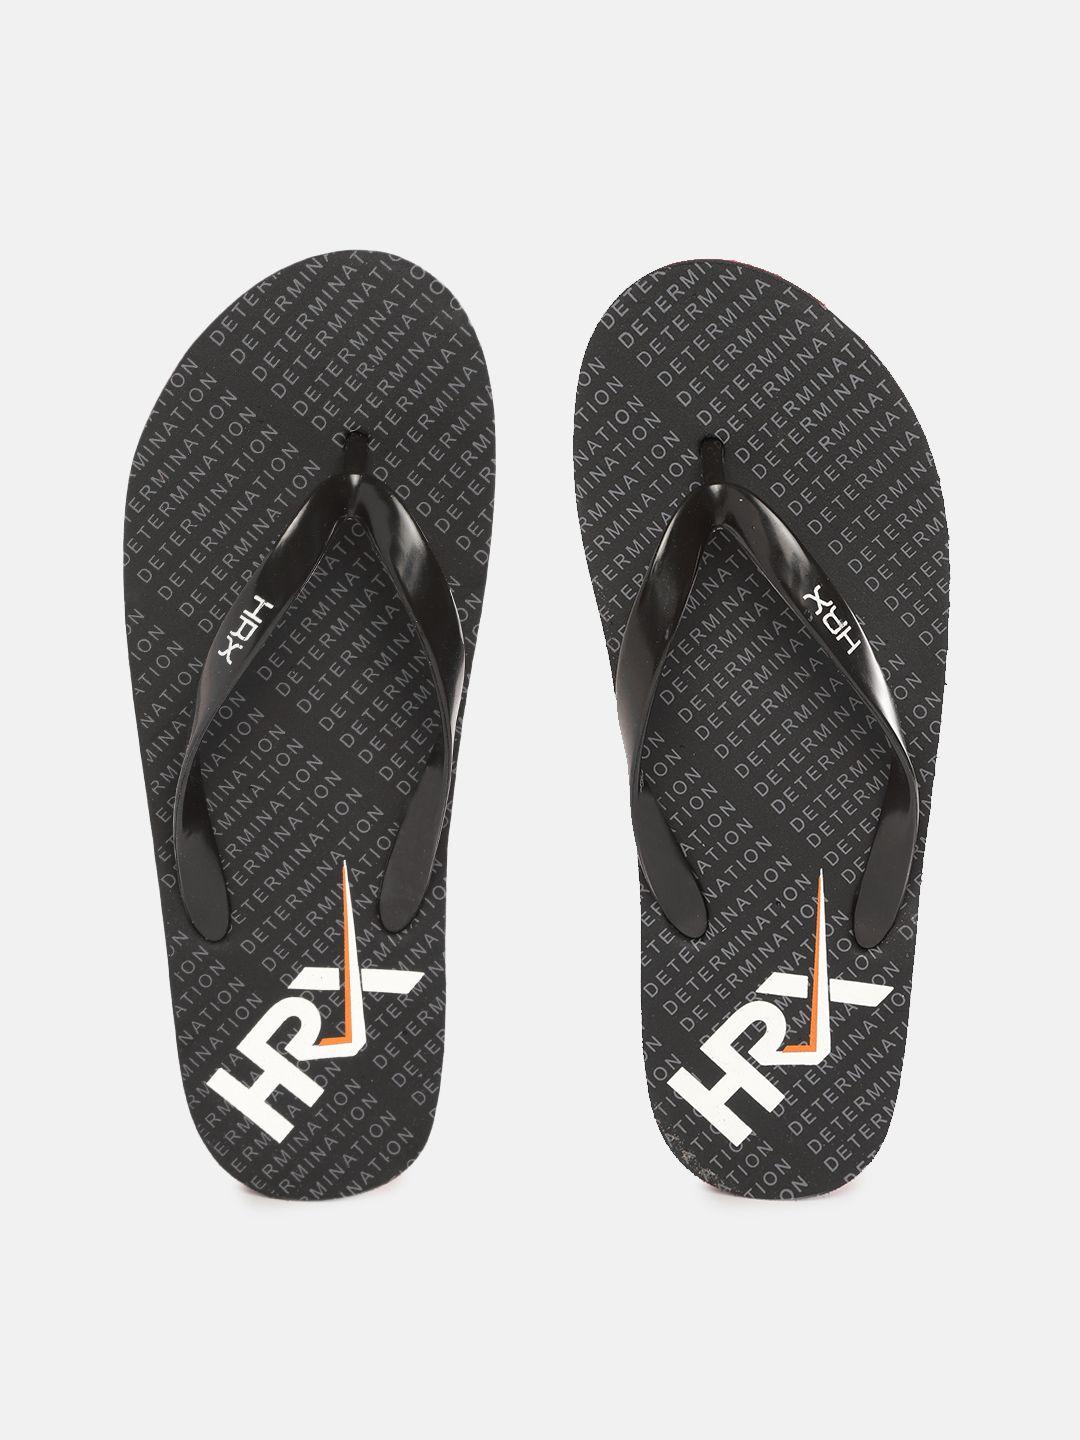 hrx by hrithik roshan men black & grey brand logo printed thong flip-flops